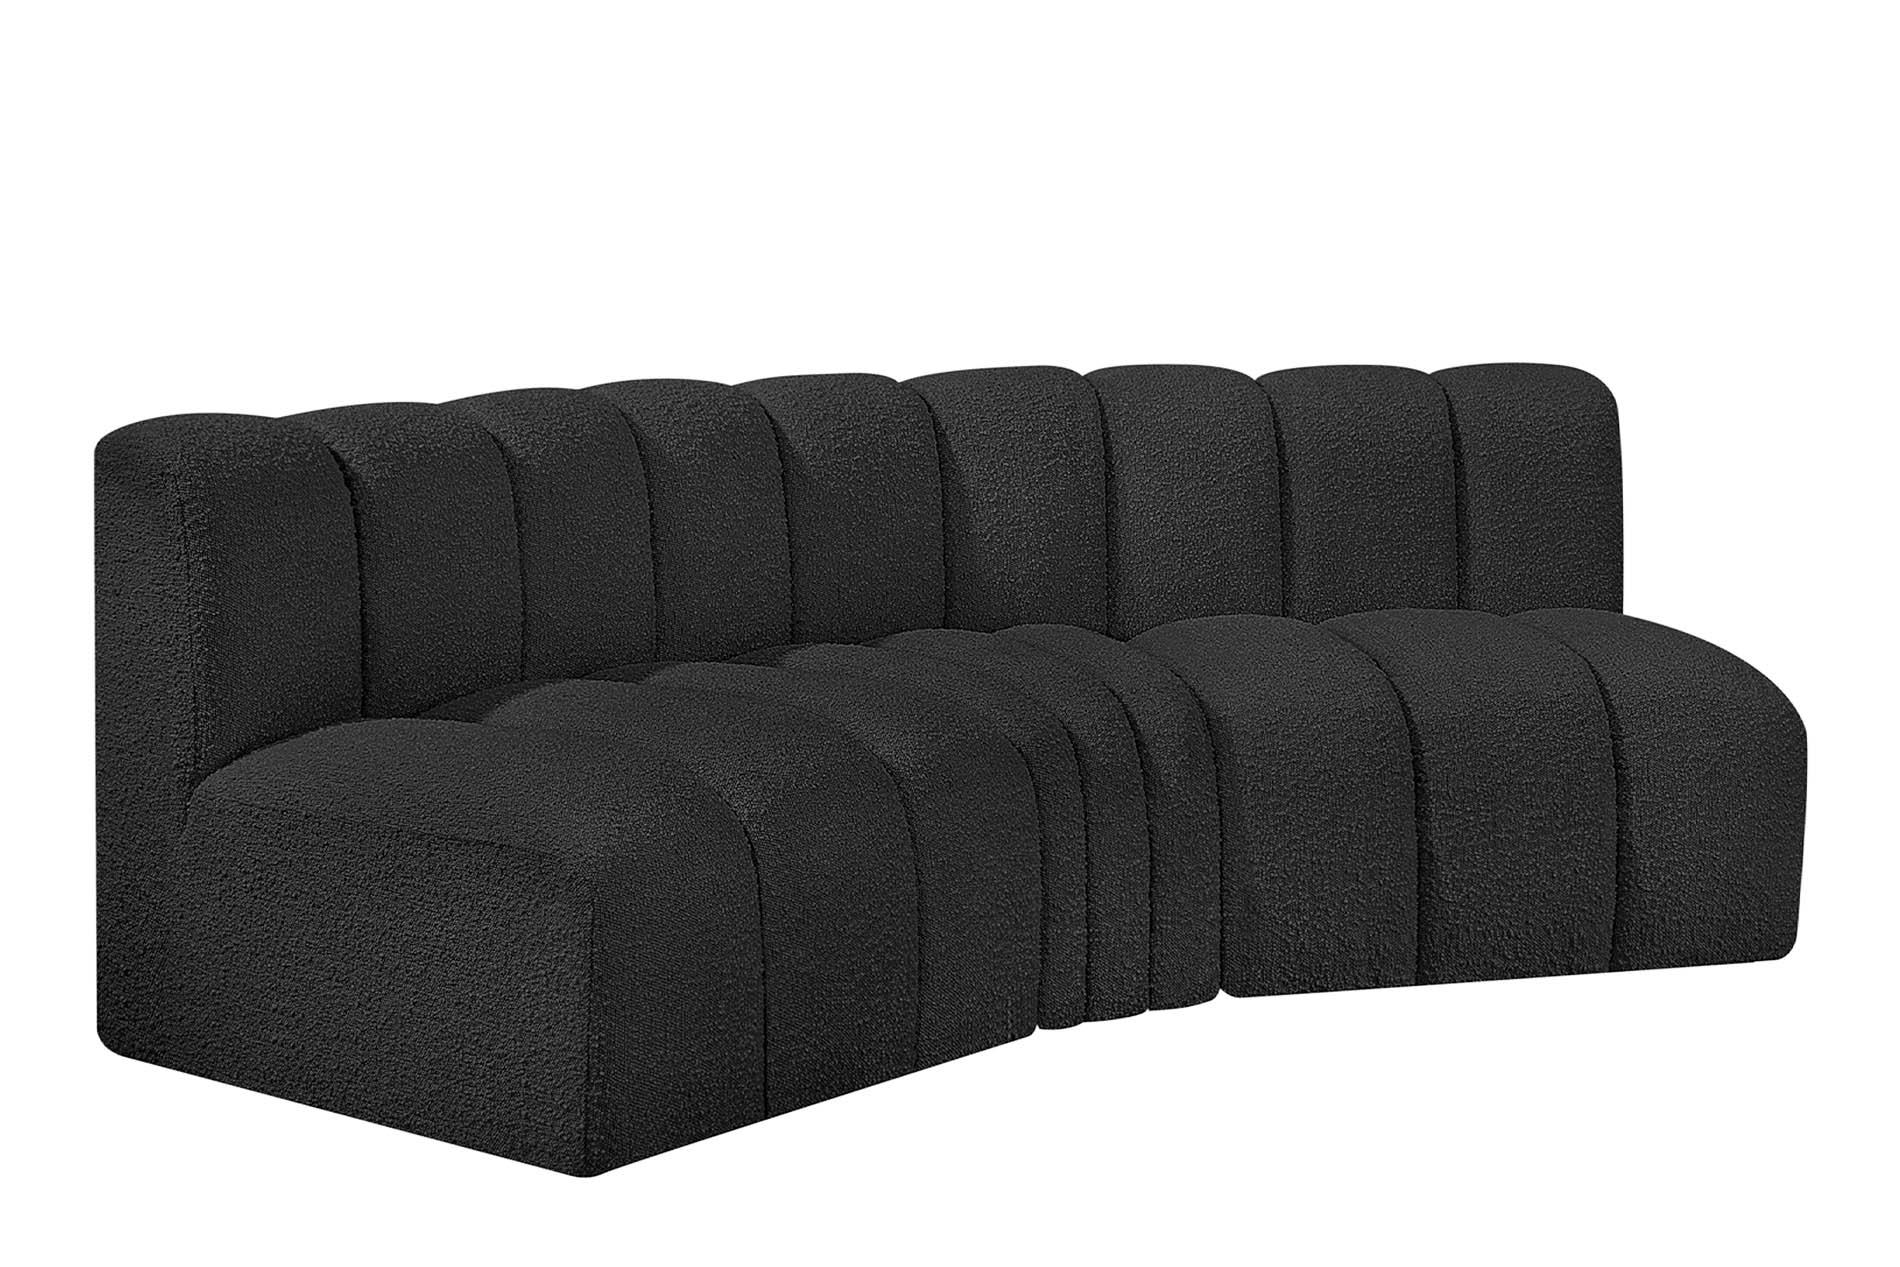 Contemporary, Modern Modular Sectional Sofa ARC 102Black-S3B 102Black-S3B in Black 